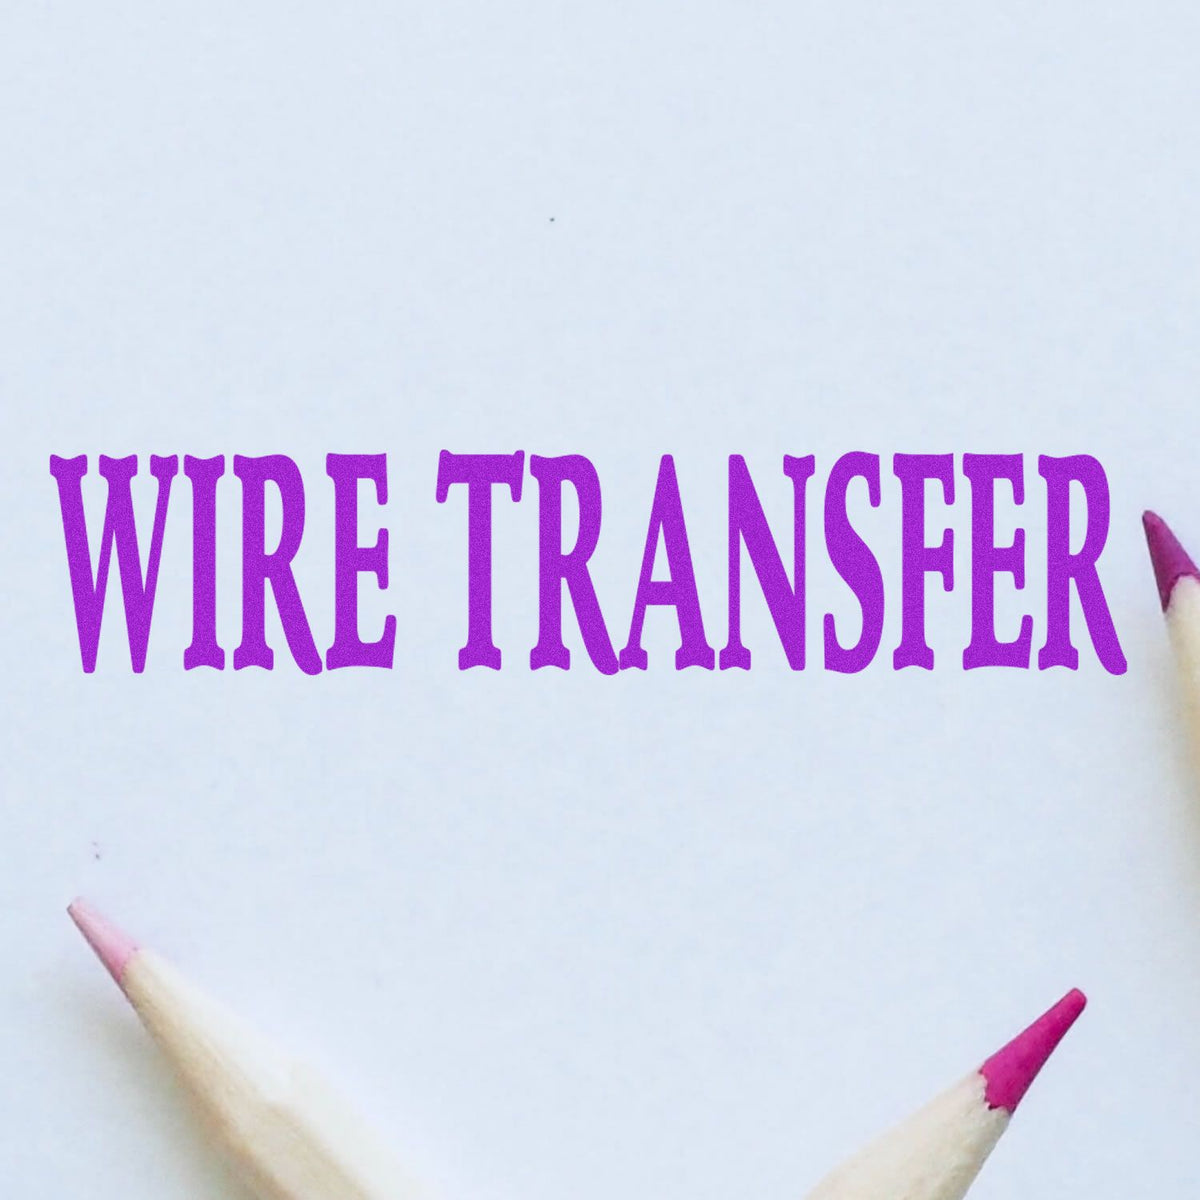 Slim Pre-Inked Wire Transfer Stamp In Use